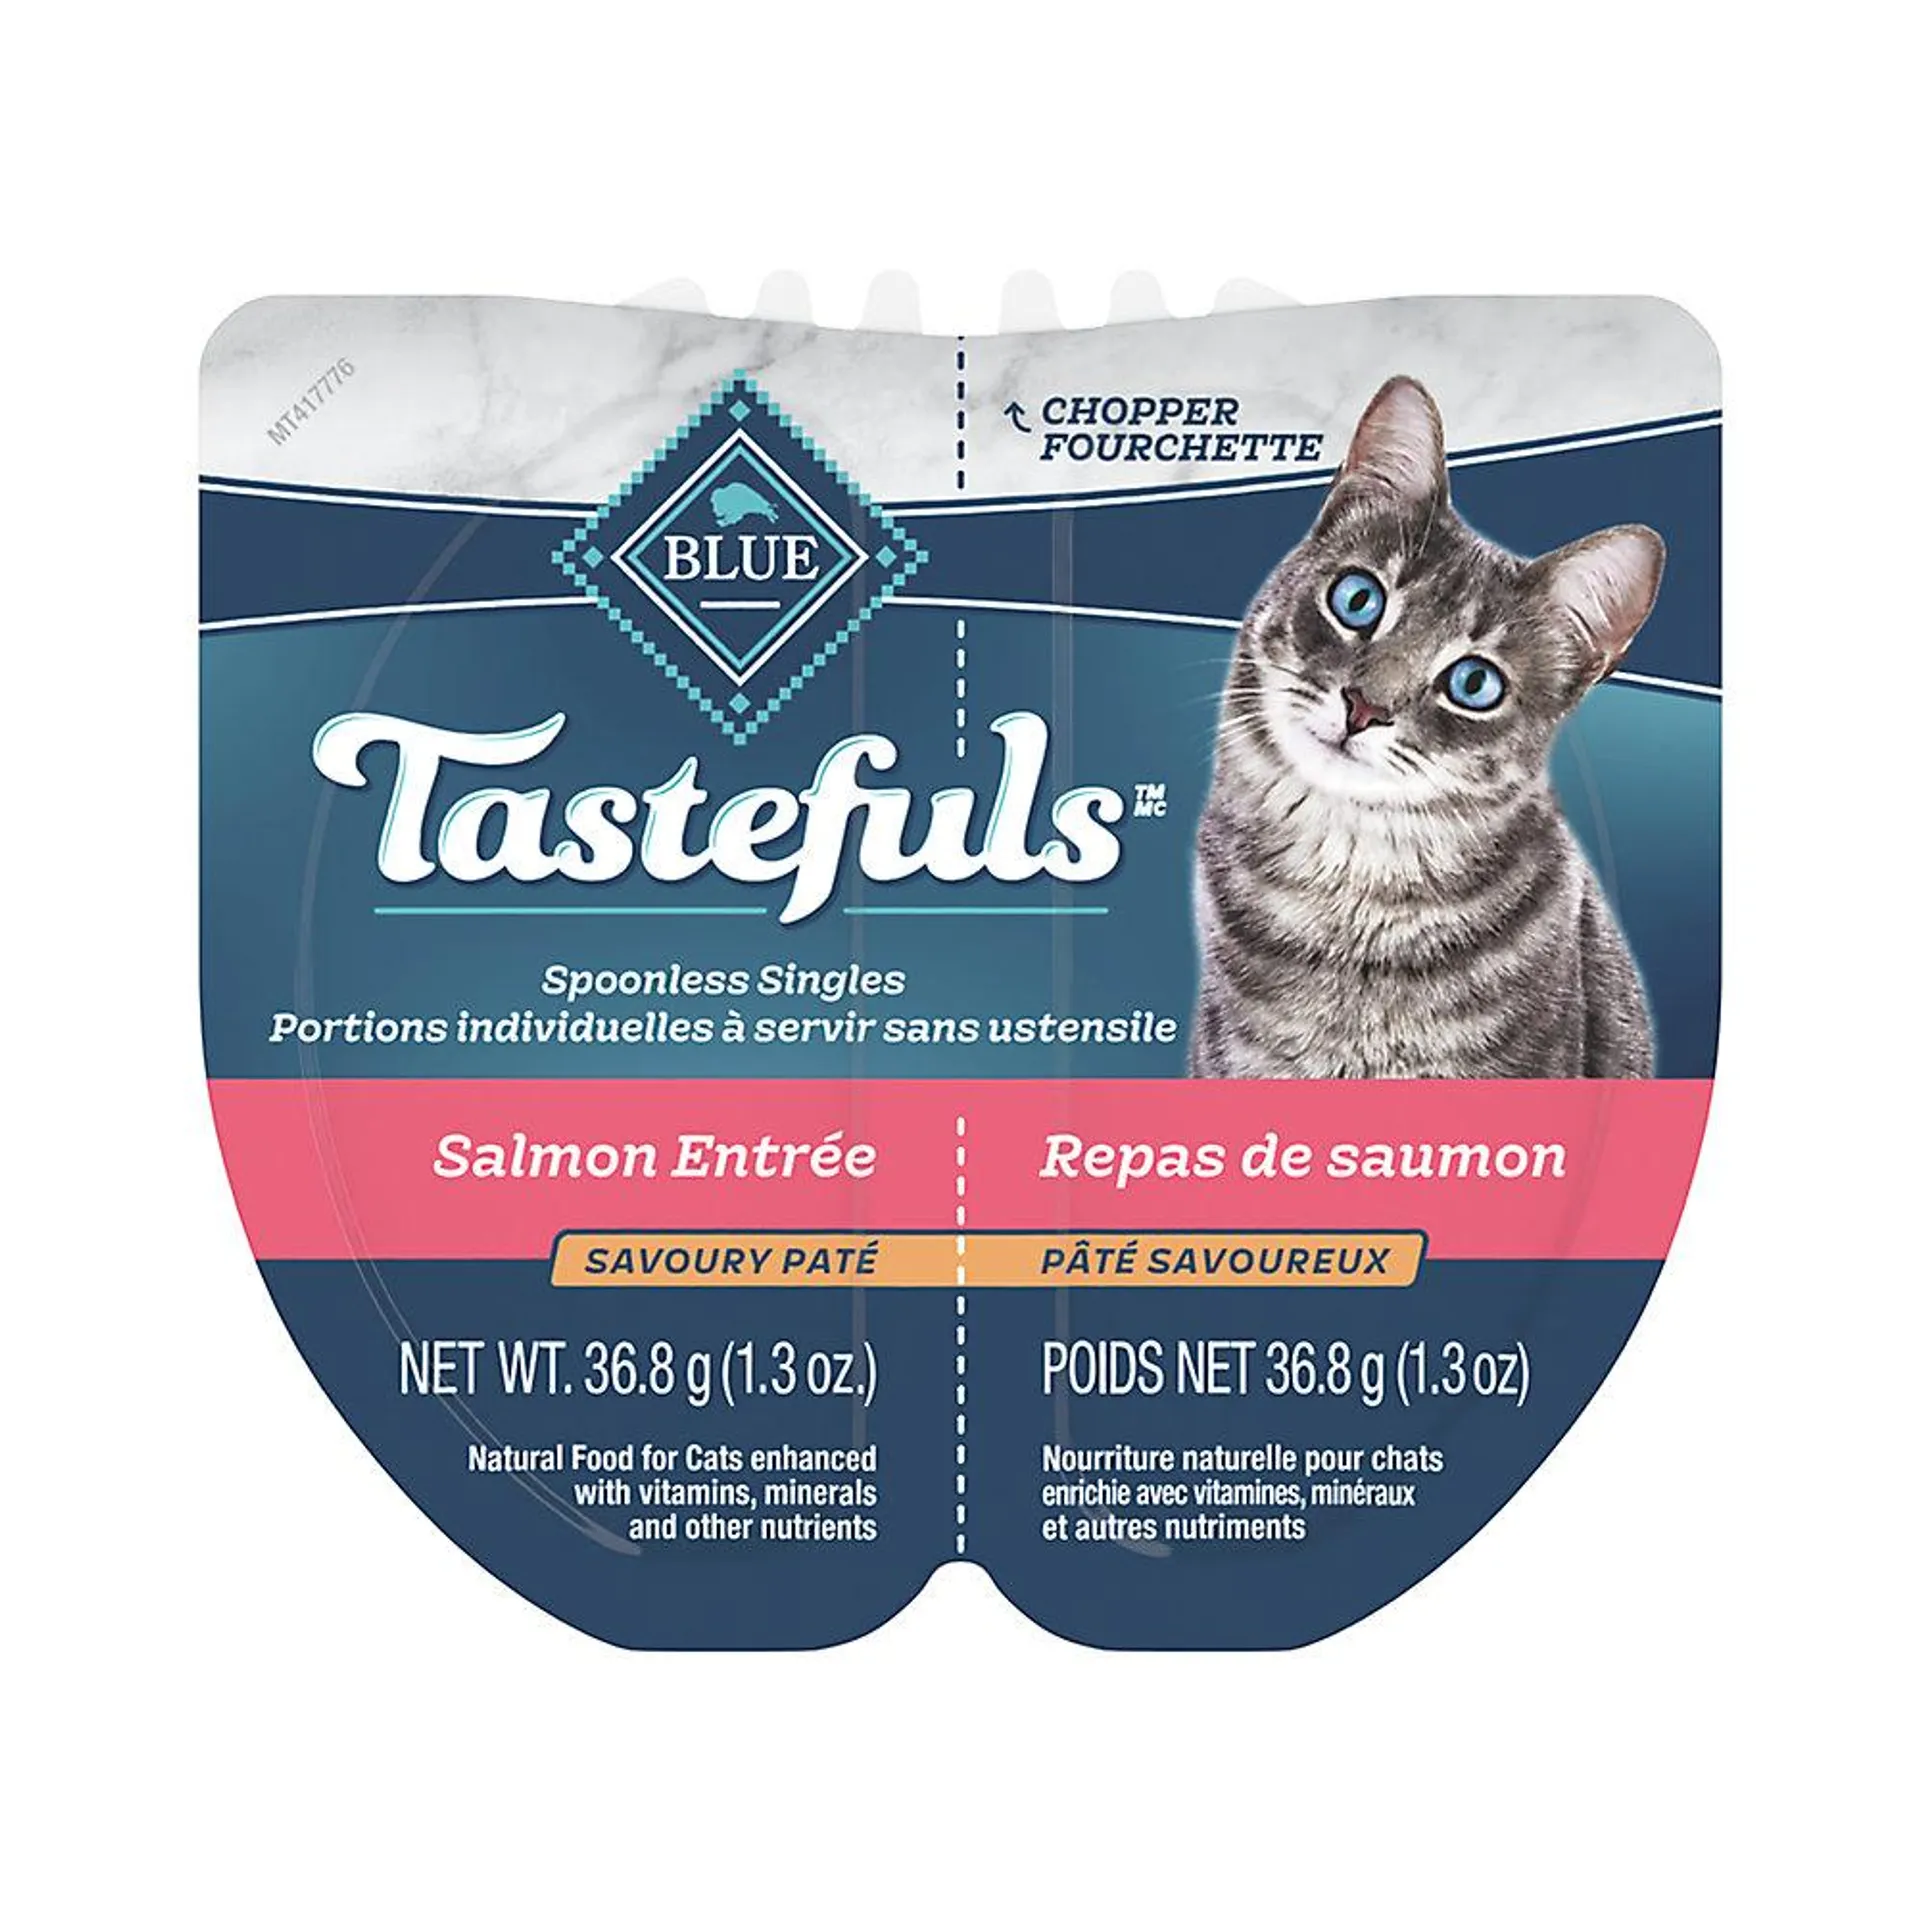 Blue Buffalo® Tastefuls™ Spoonless Singles Adult Cat Food - Natural, Salmon